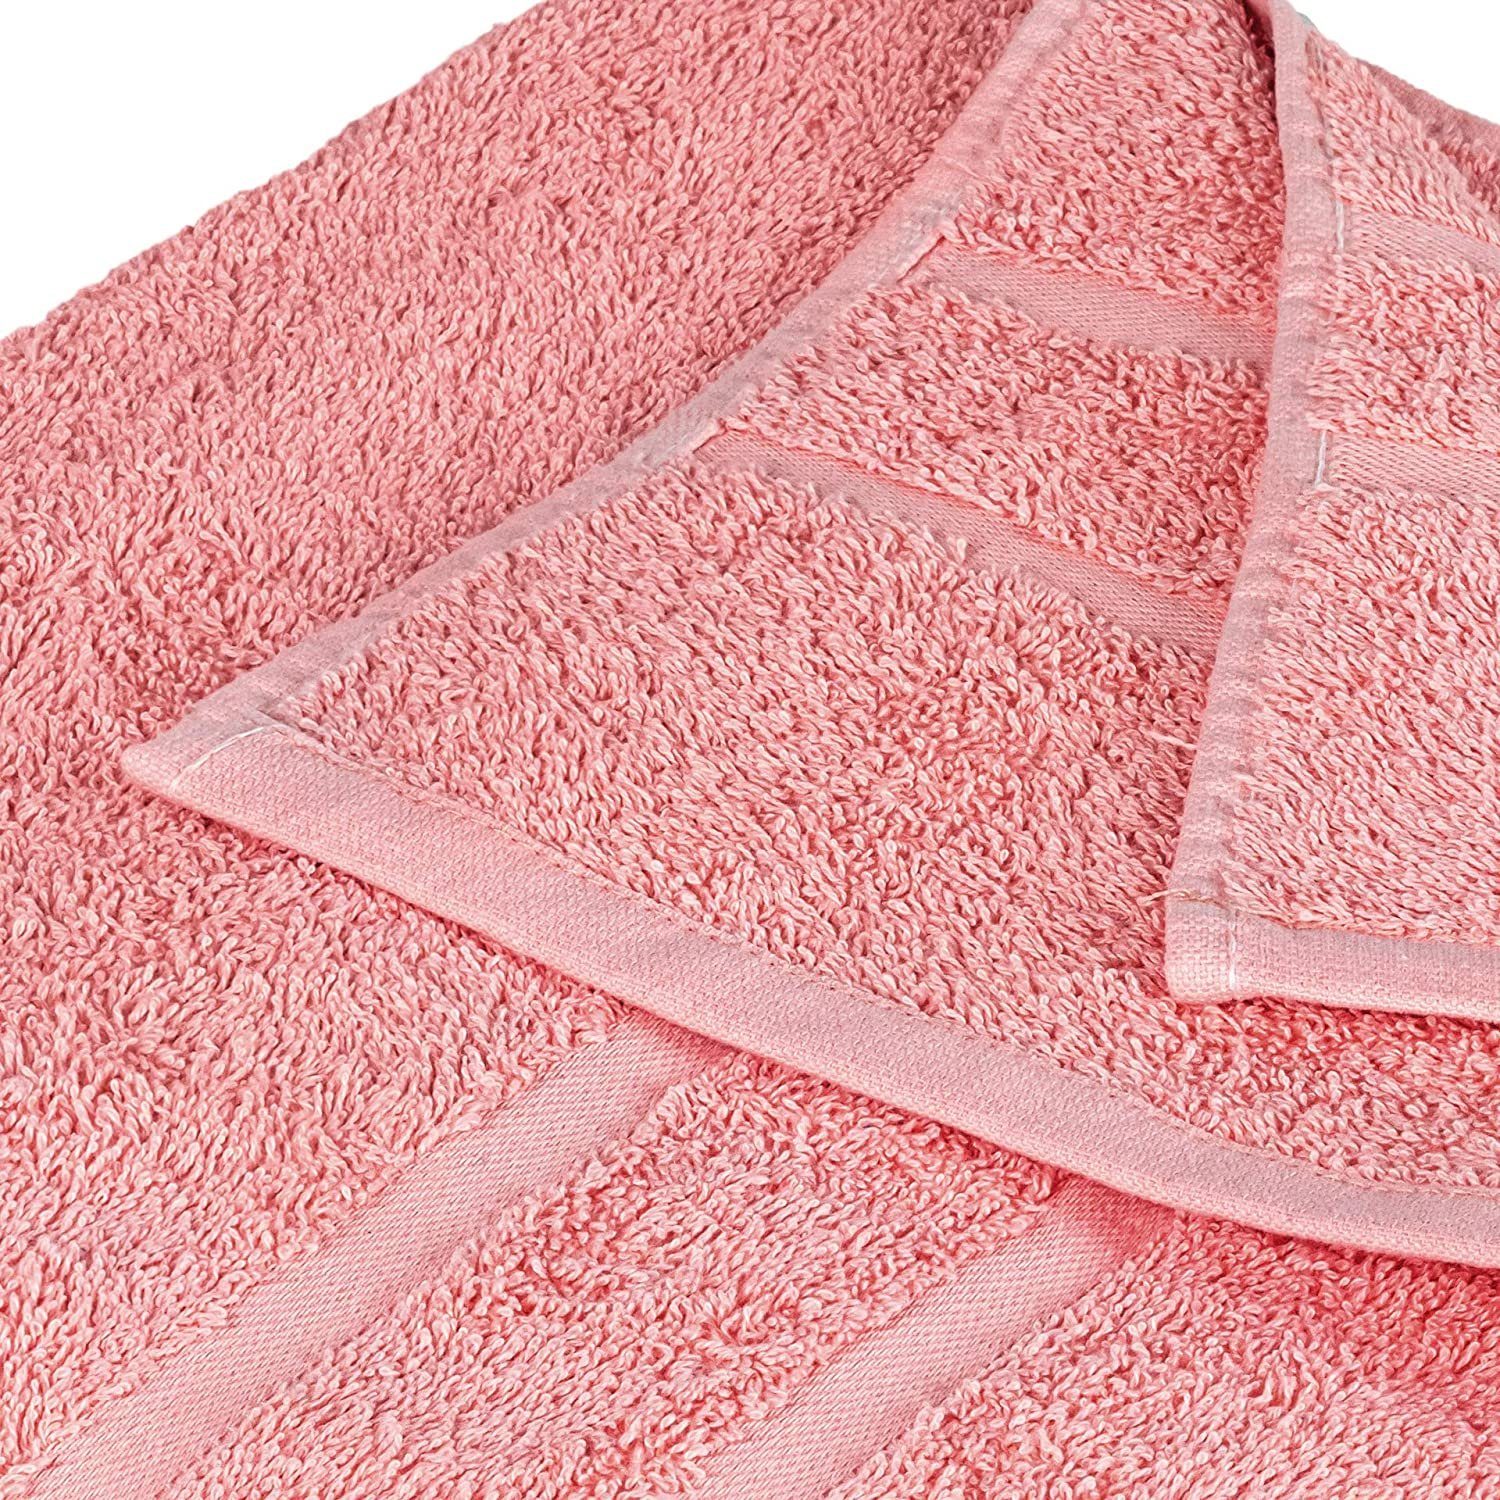 StickandShine Handtuch Handtücher Badetücher Saunatücher 500 Lachs in GSM 100% Gästehandtücher Duschtücher Baumwolle zur Wahl